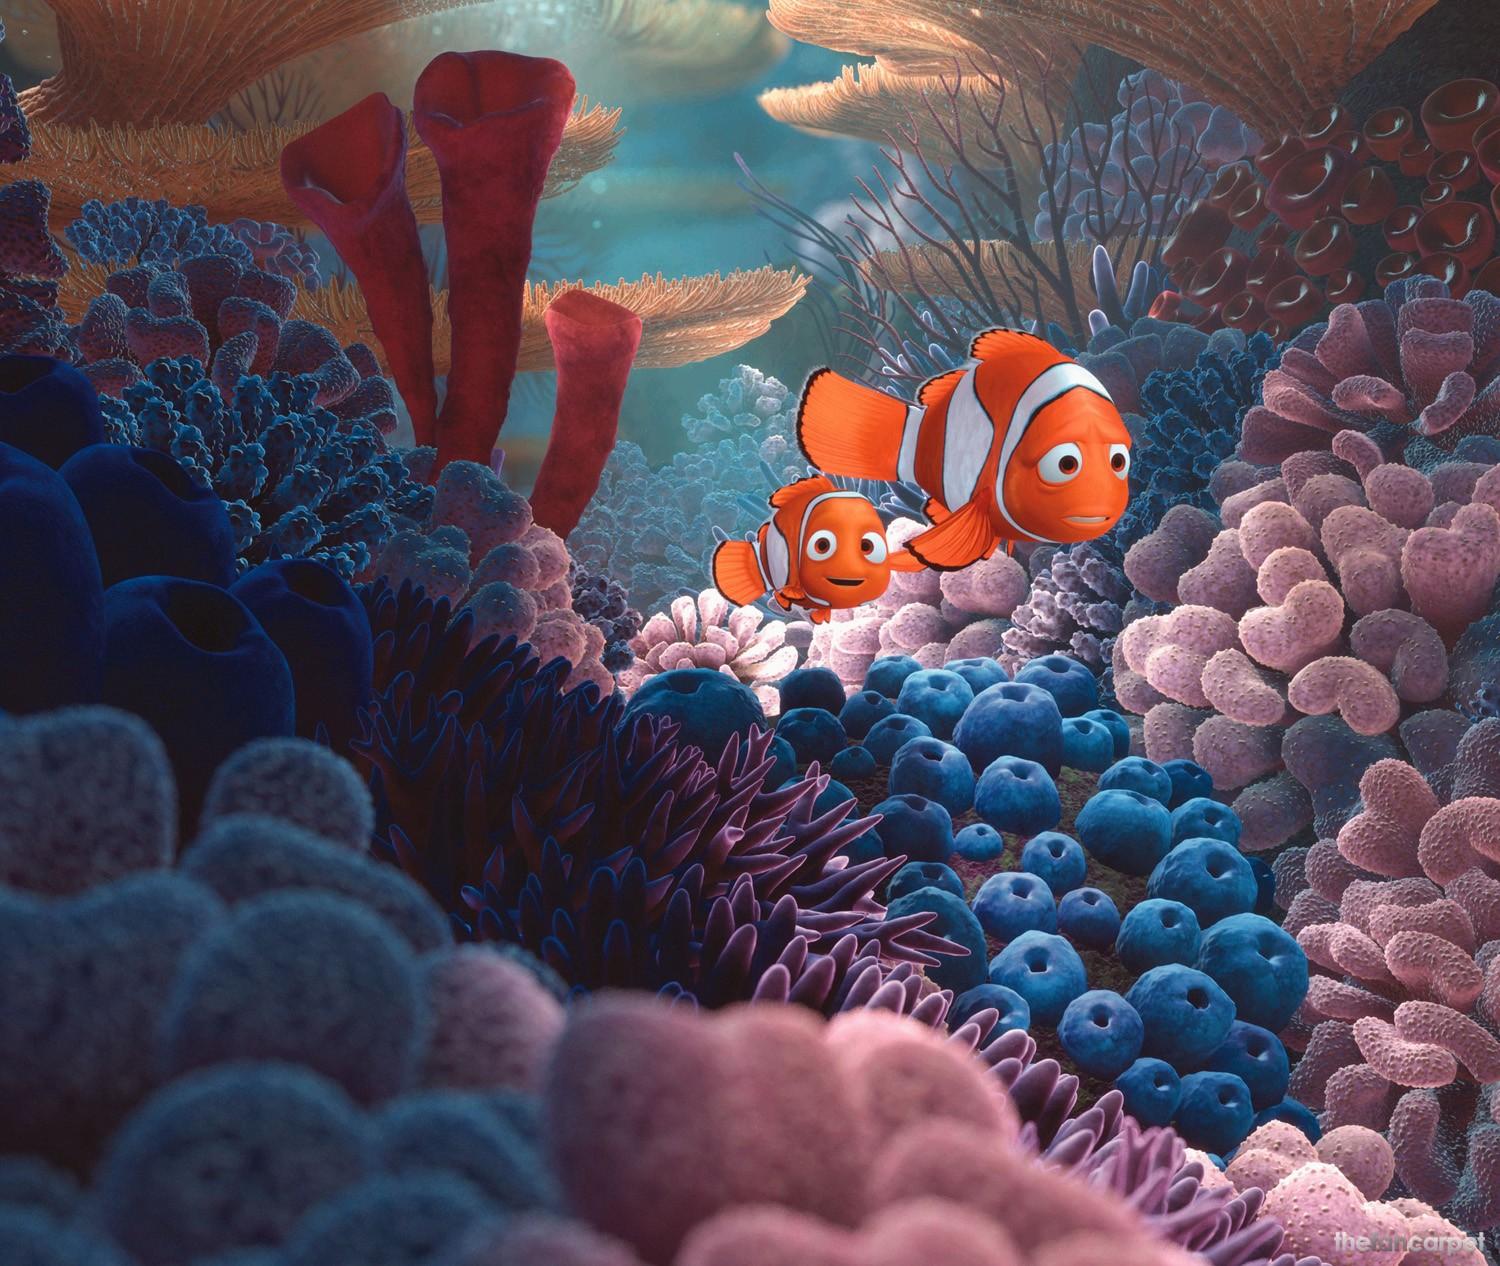 4. Finding Nemo (2003)